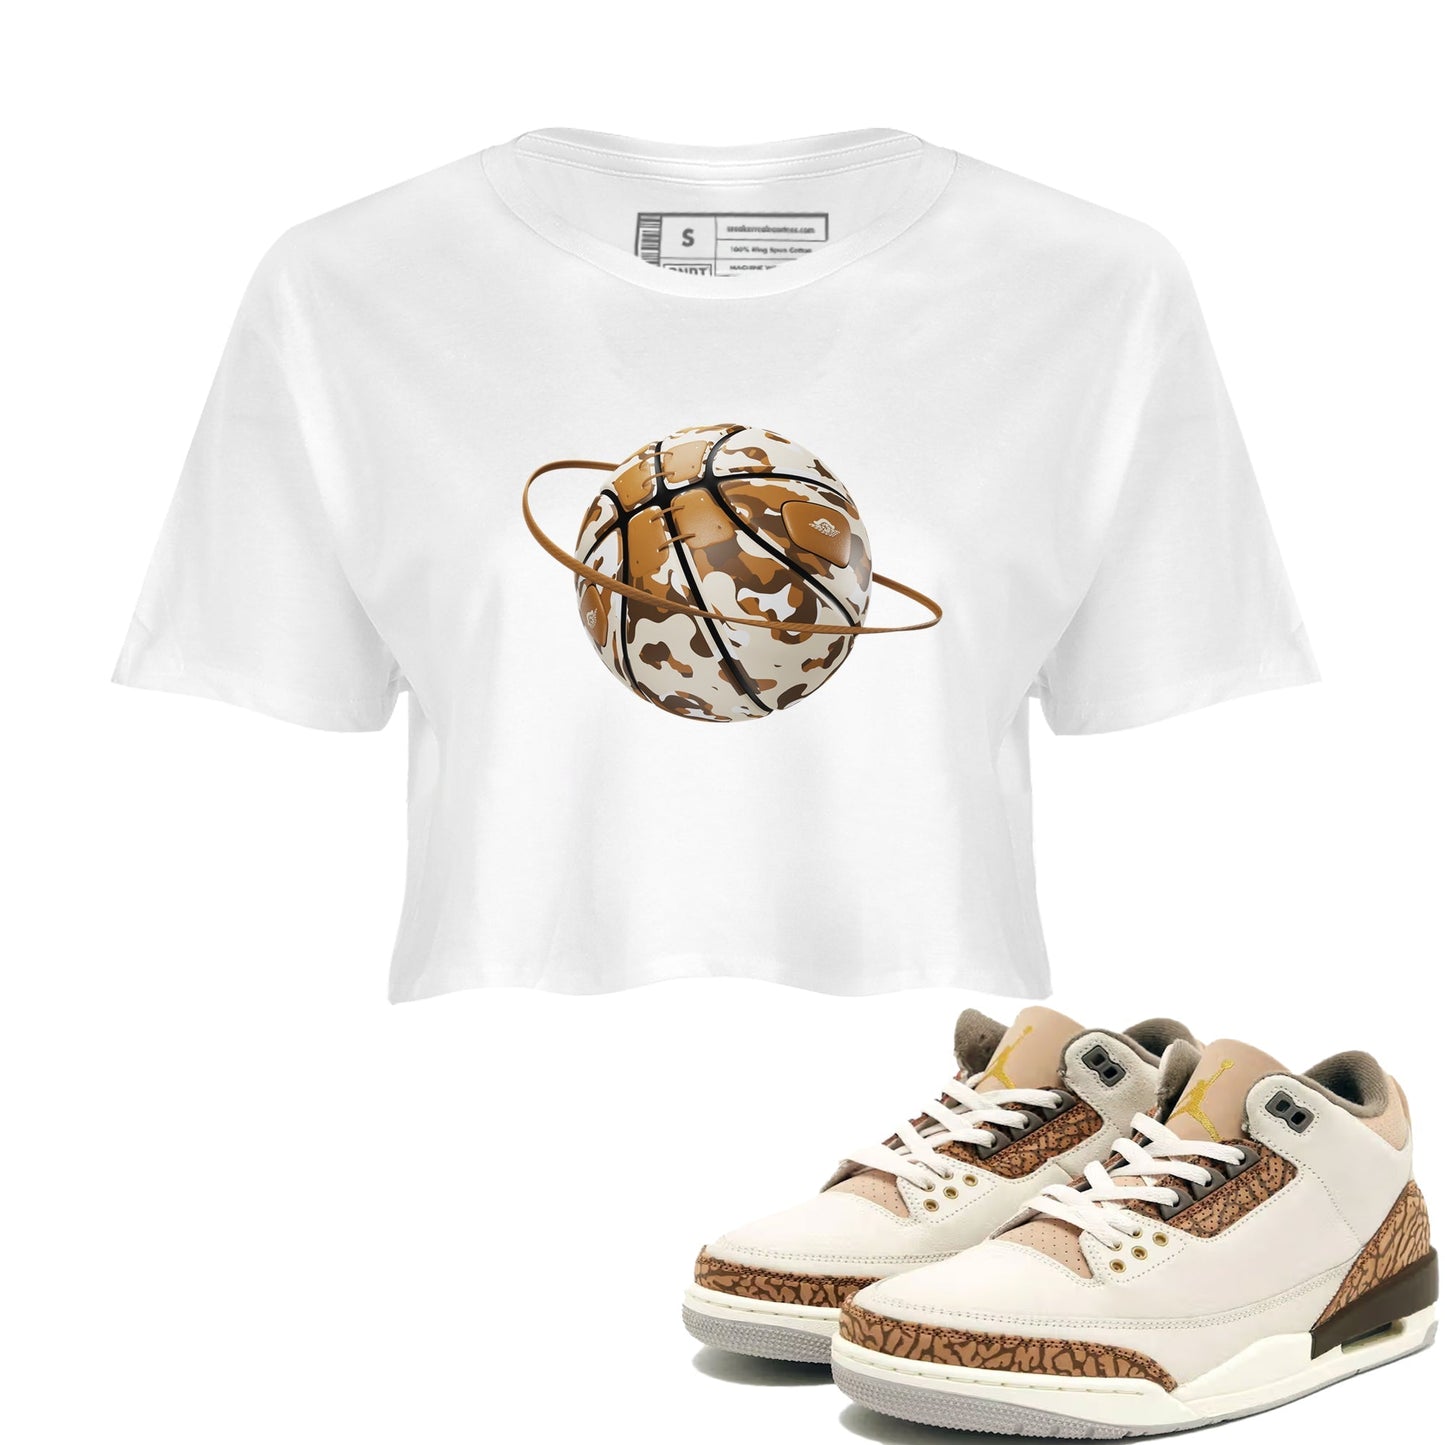 Air Jordan 3 Palomino shirt to match jordans Camo Basketball Planet Streetwear Sneaker Shirt AJ3 Palomino Drip Gear Zone Sneaker Matching Clothing White 1 Crop T-Shirt